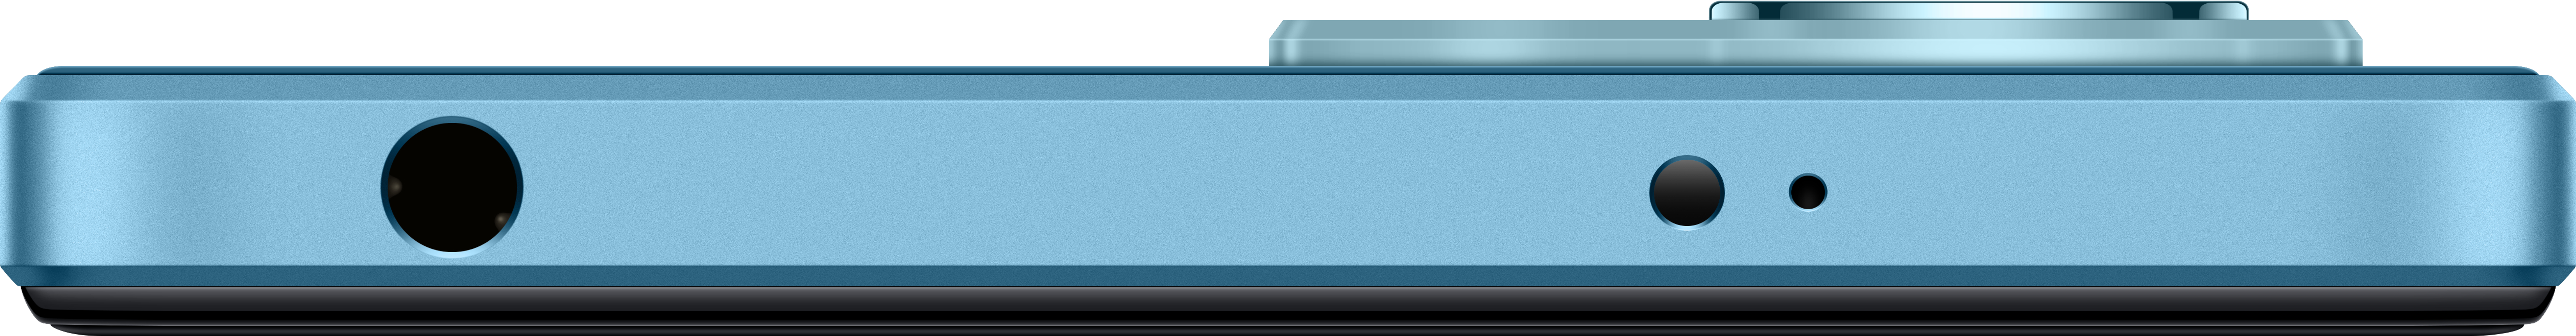 64 REDMI Ice 4+128GB NOTE XIAOMI 12 Blue GB BLUE Dual ICE SIM